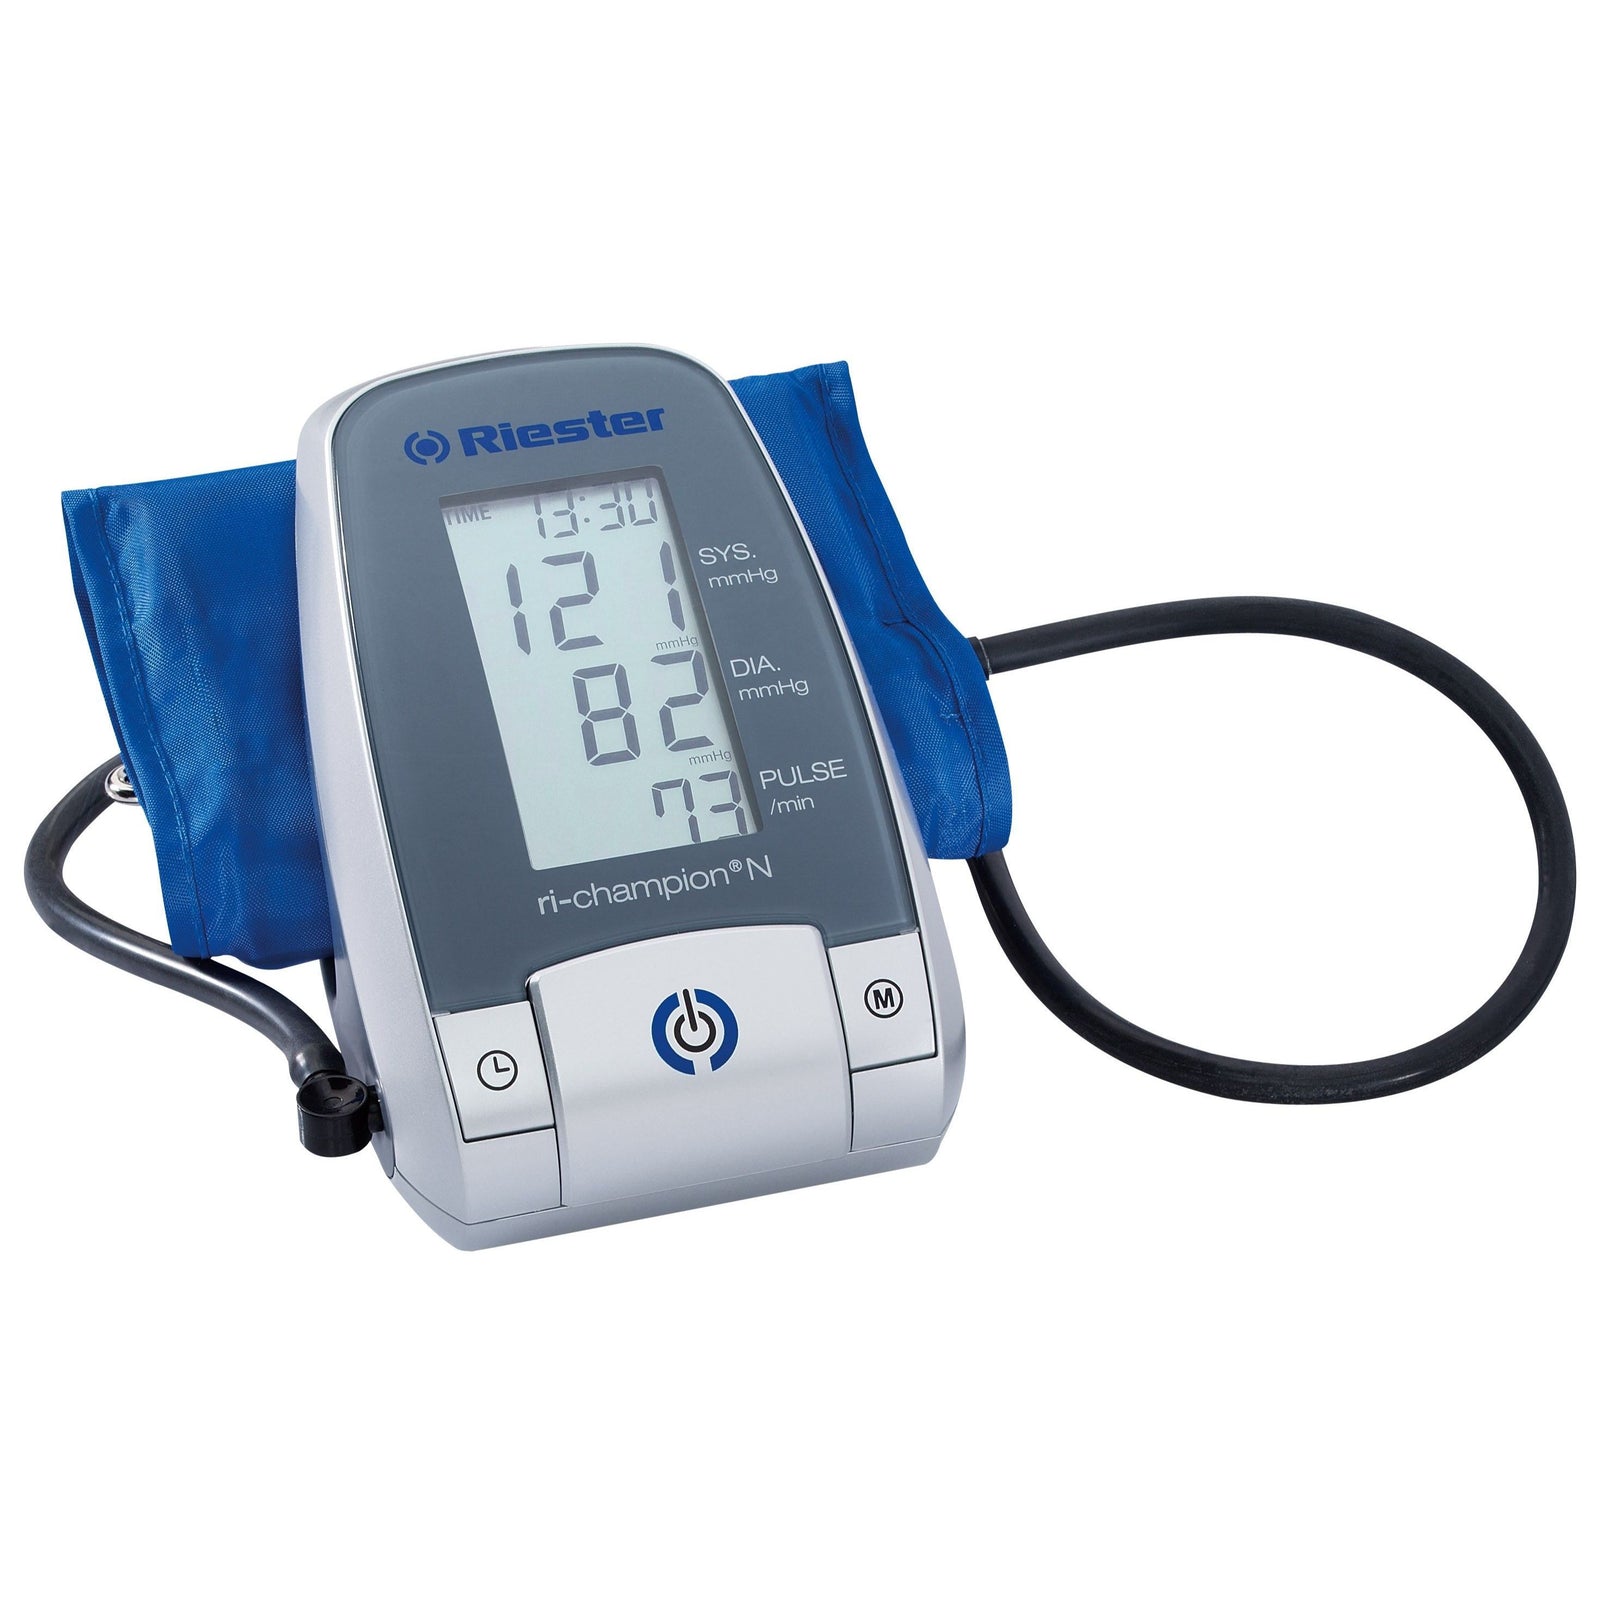 Riester Ri-Champion N Digital Blood Pressure Monitor